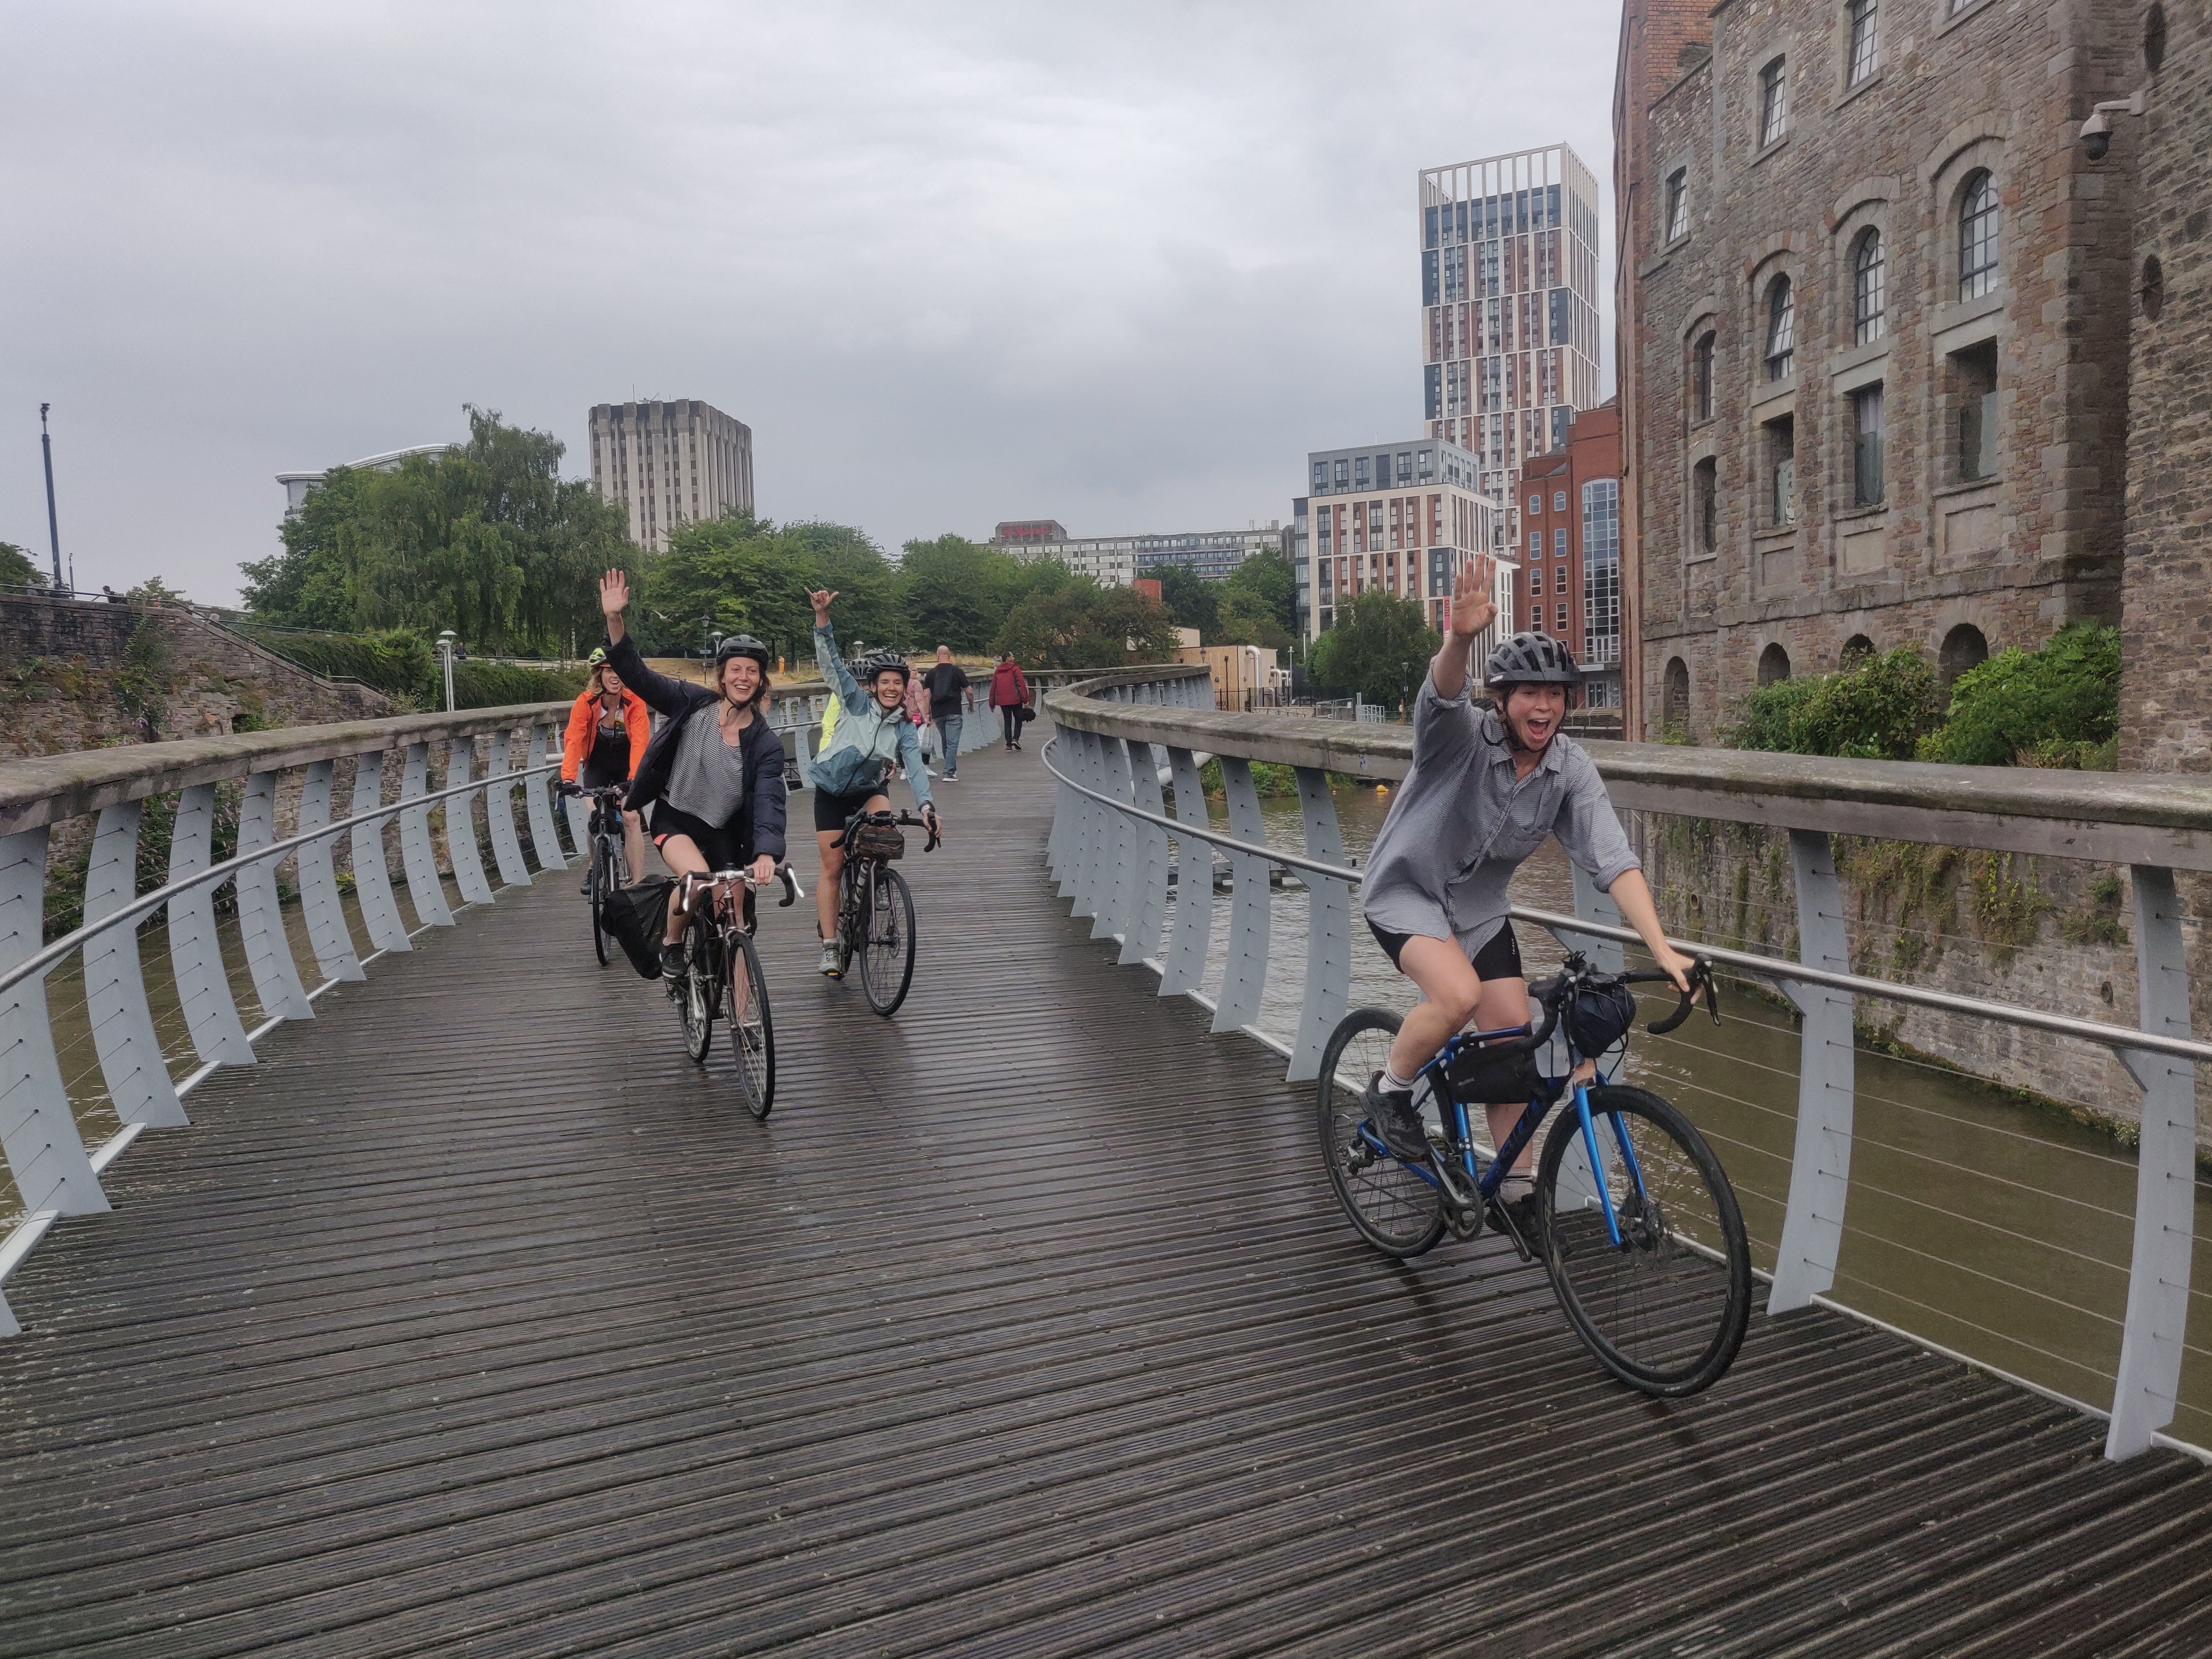 Group cycling on a bridge